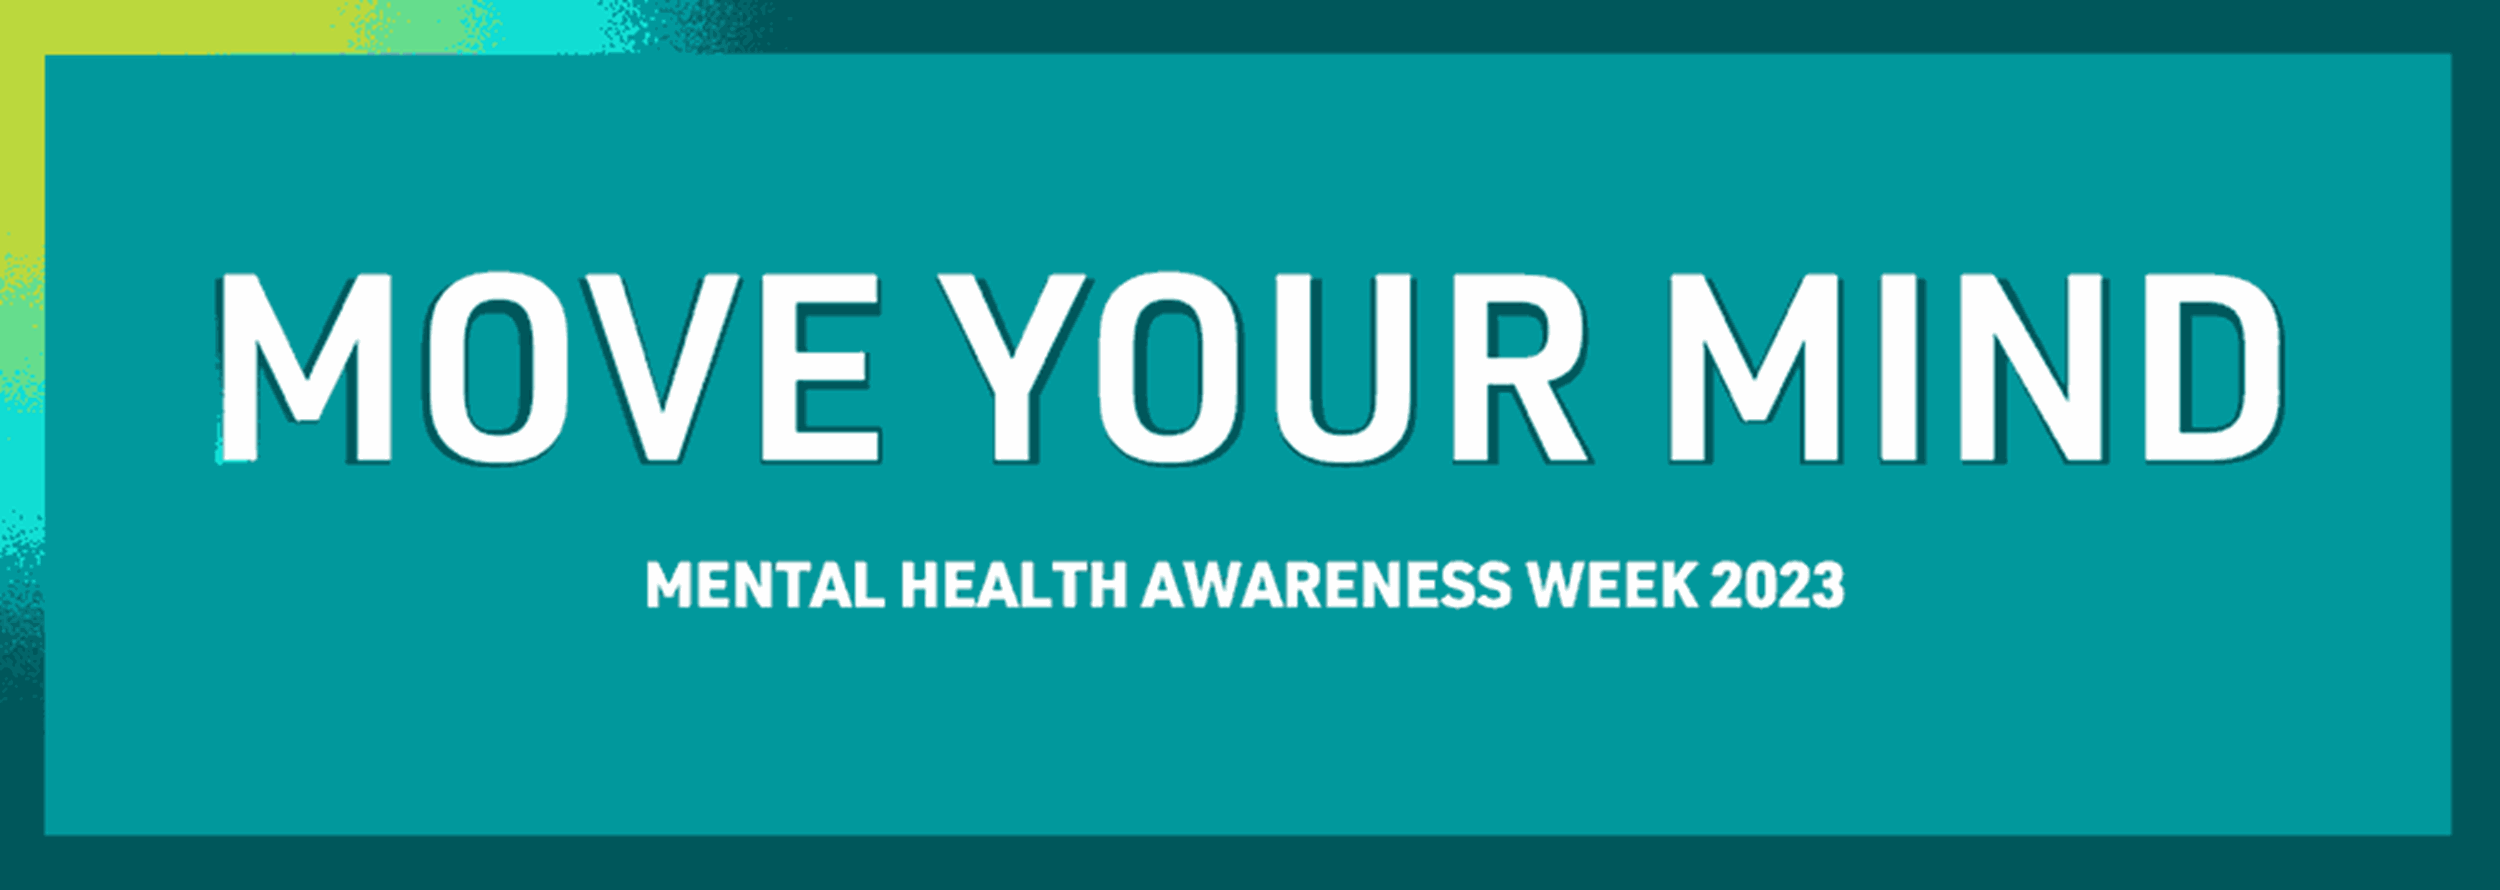 Move your mind: mental health awareness week 2023